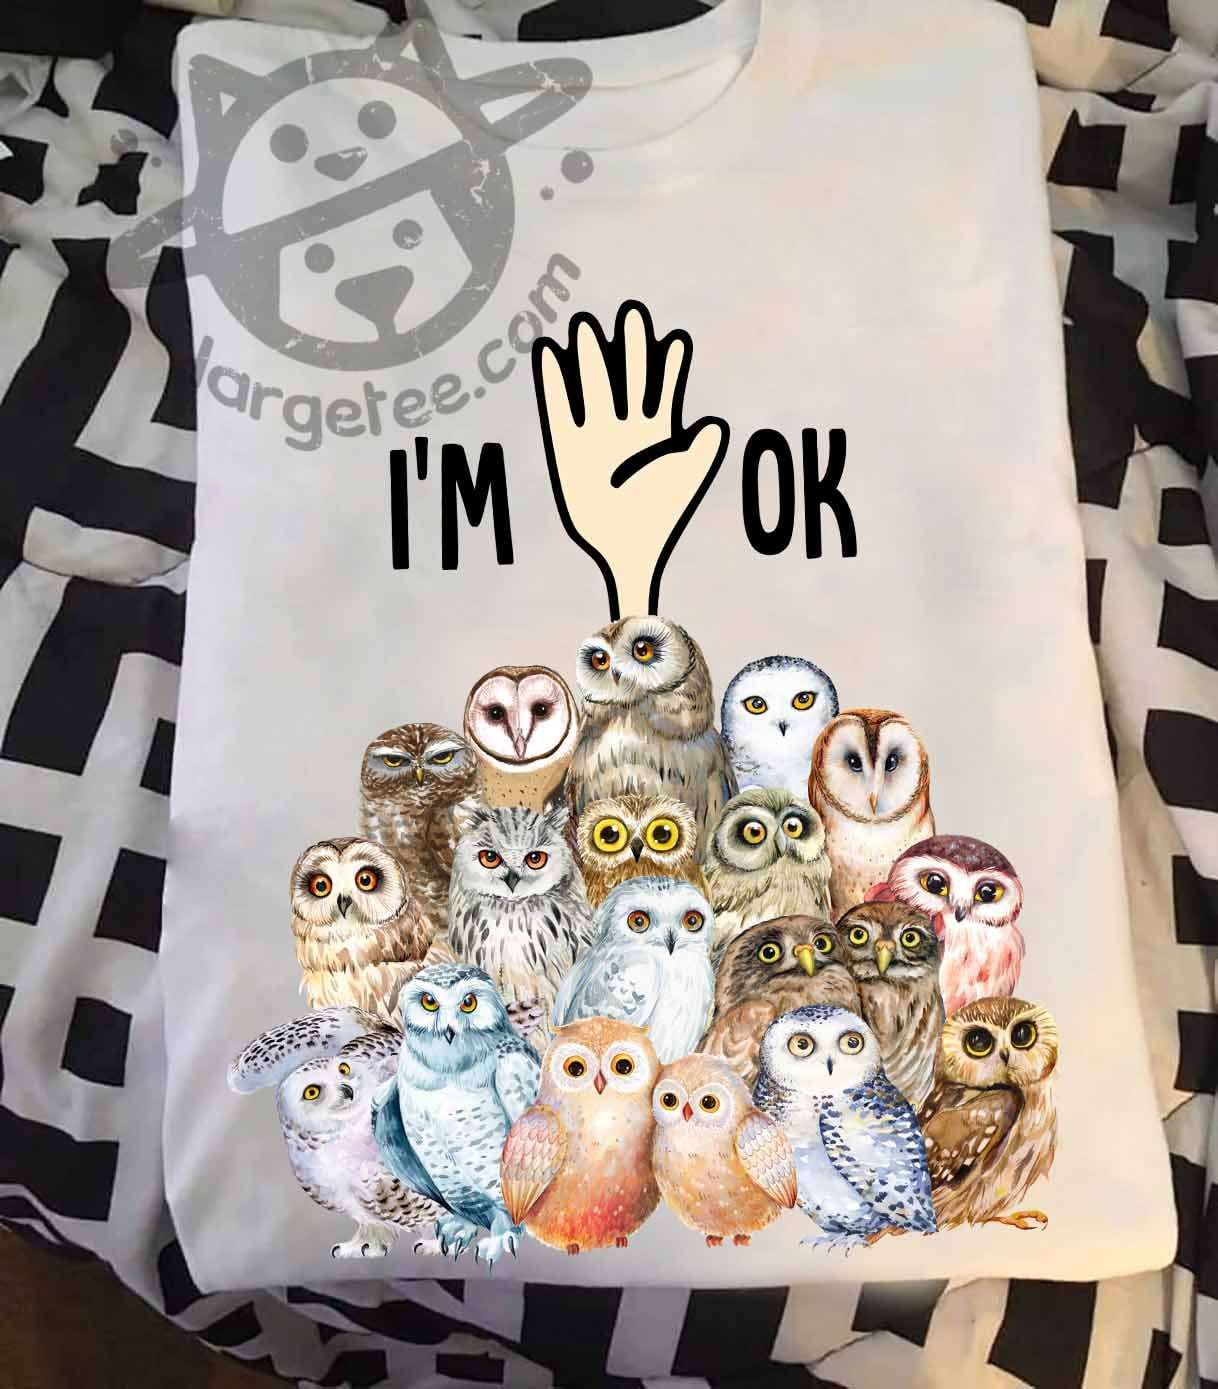 I'm ok - Bunch of owls, owl the gorgeous animal